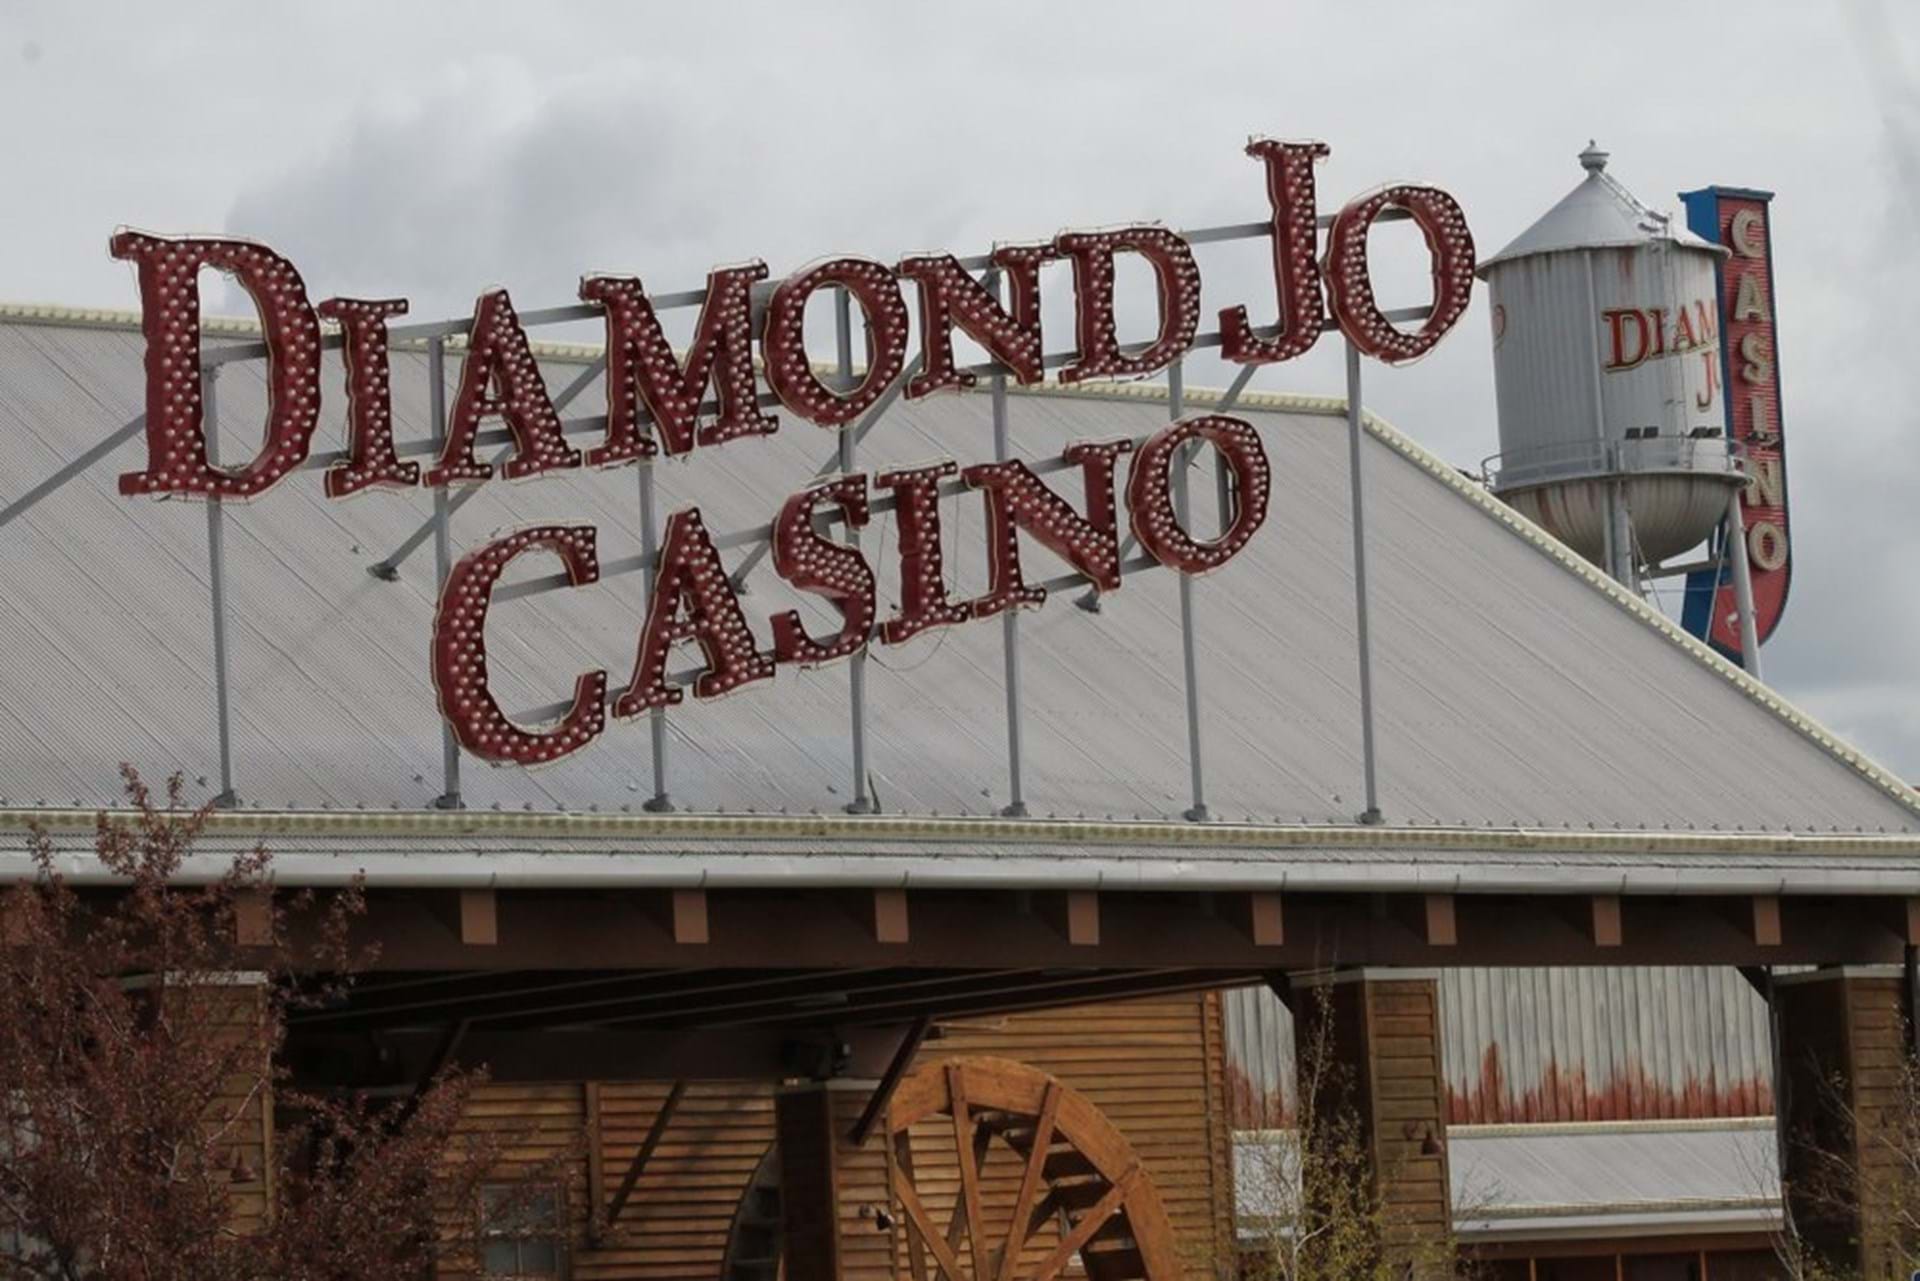 Diamond Jo Casino Northwood